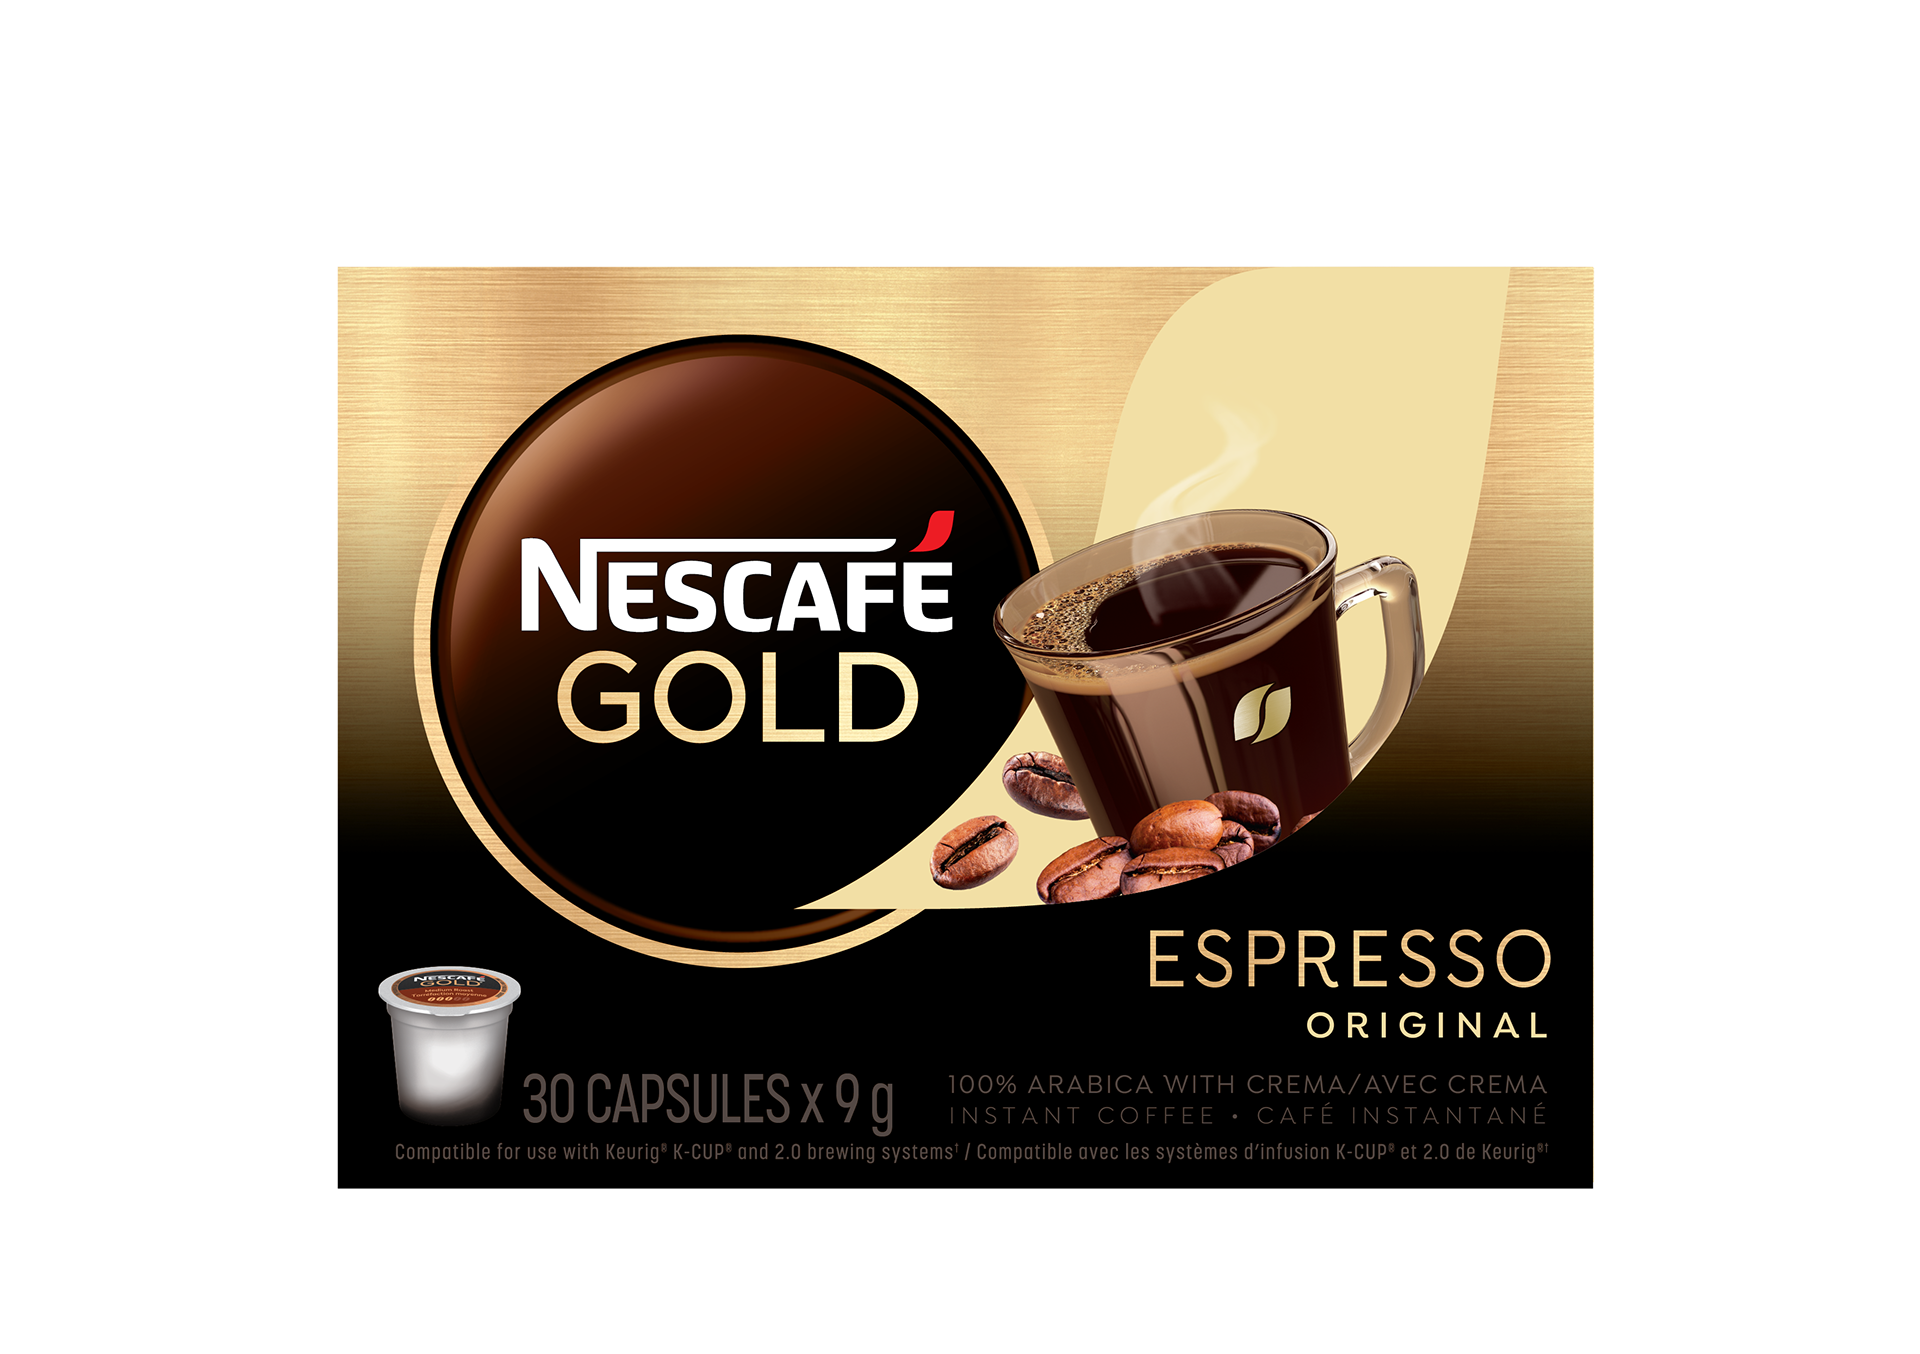 Nescafé Gold ice cream breaks new ground - Tea & Coffee Trade Journal